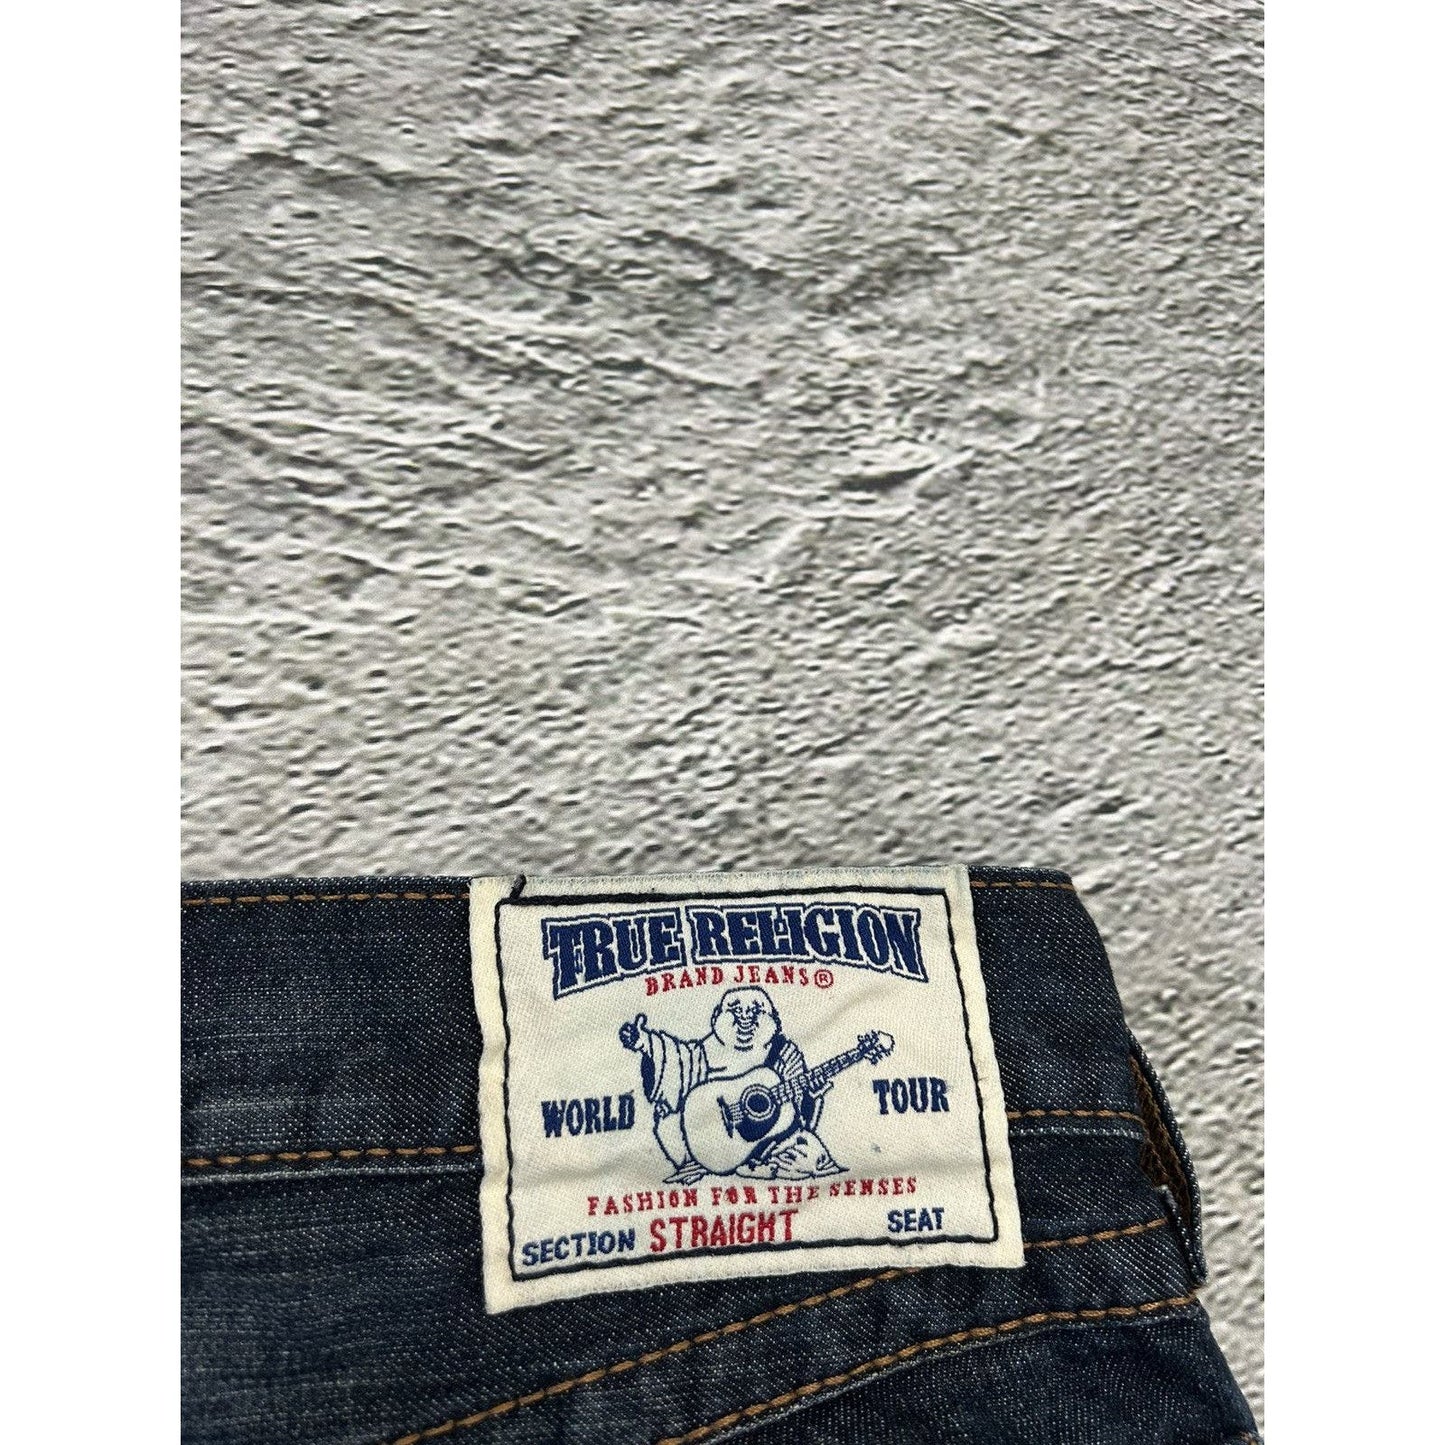 True Religion vintage jeans navy red thick stitching Y2K